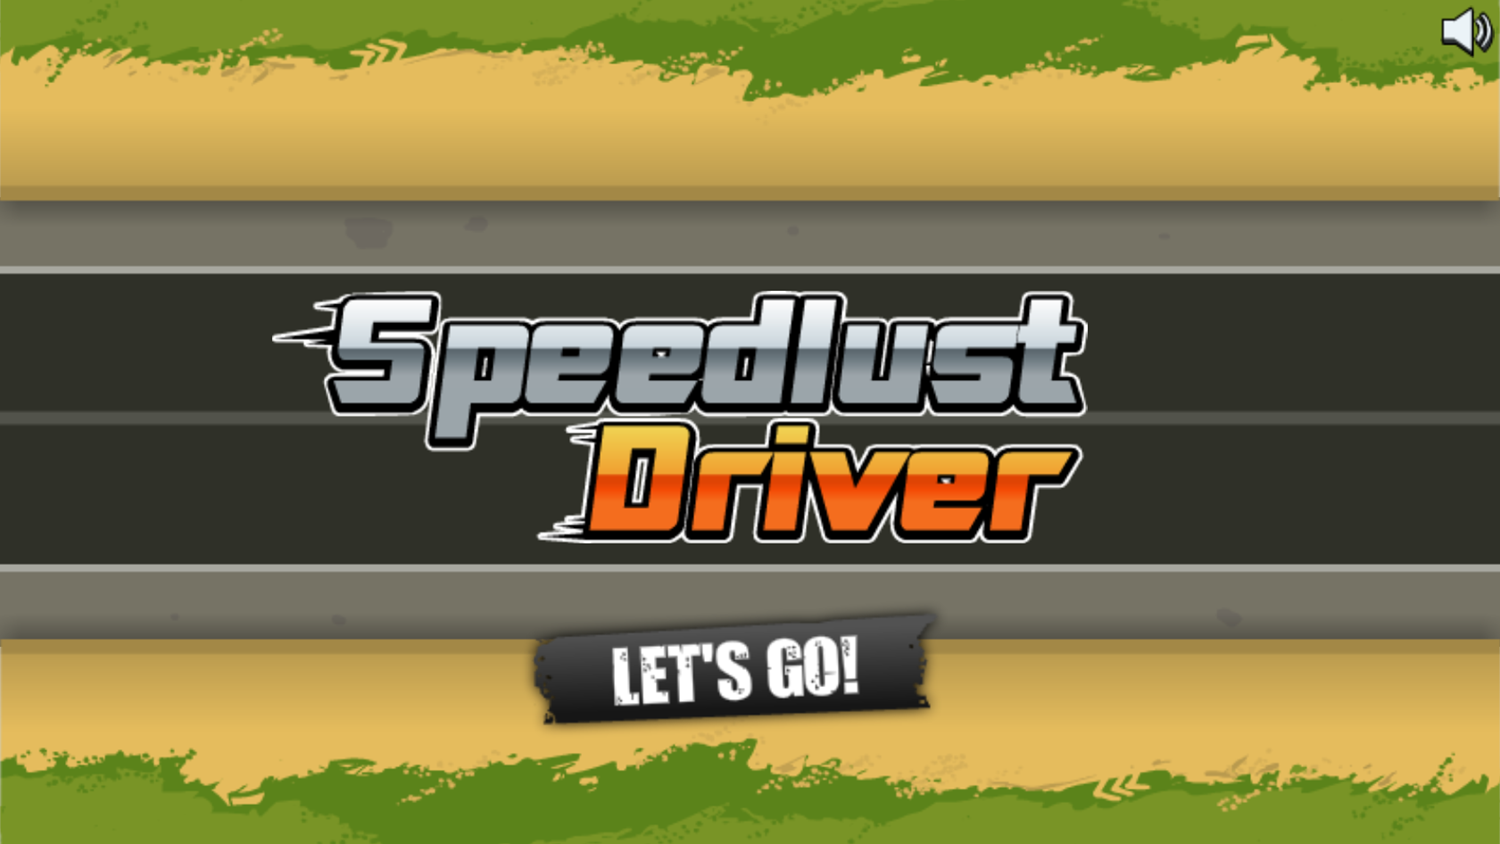 Speedlust Driver Game Welcome Screen Screenshot.